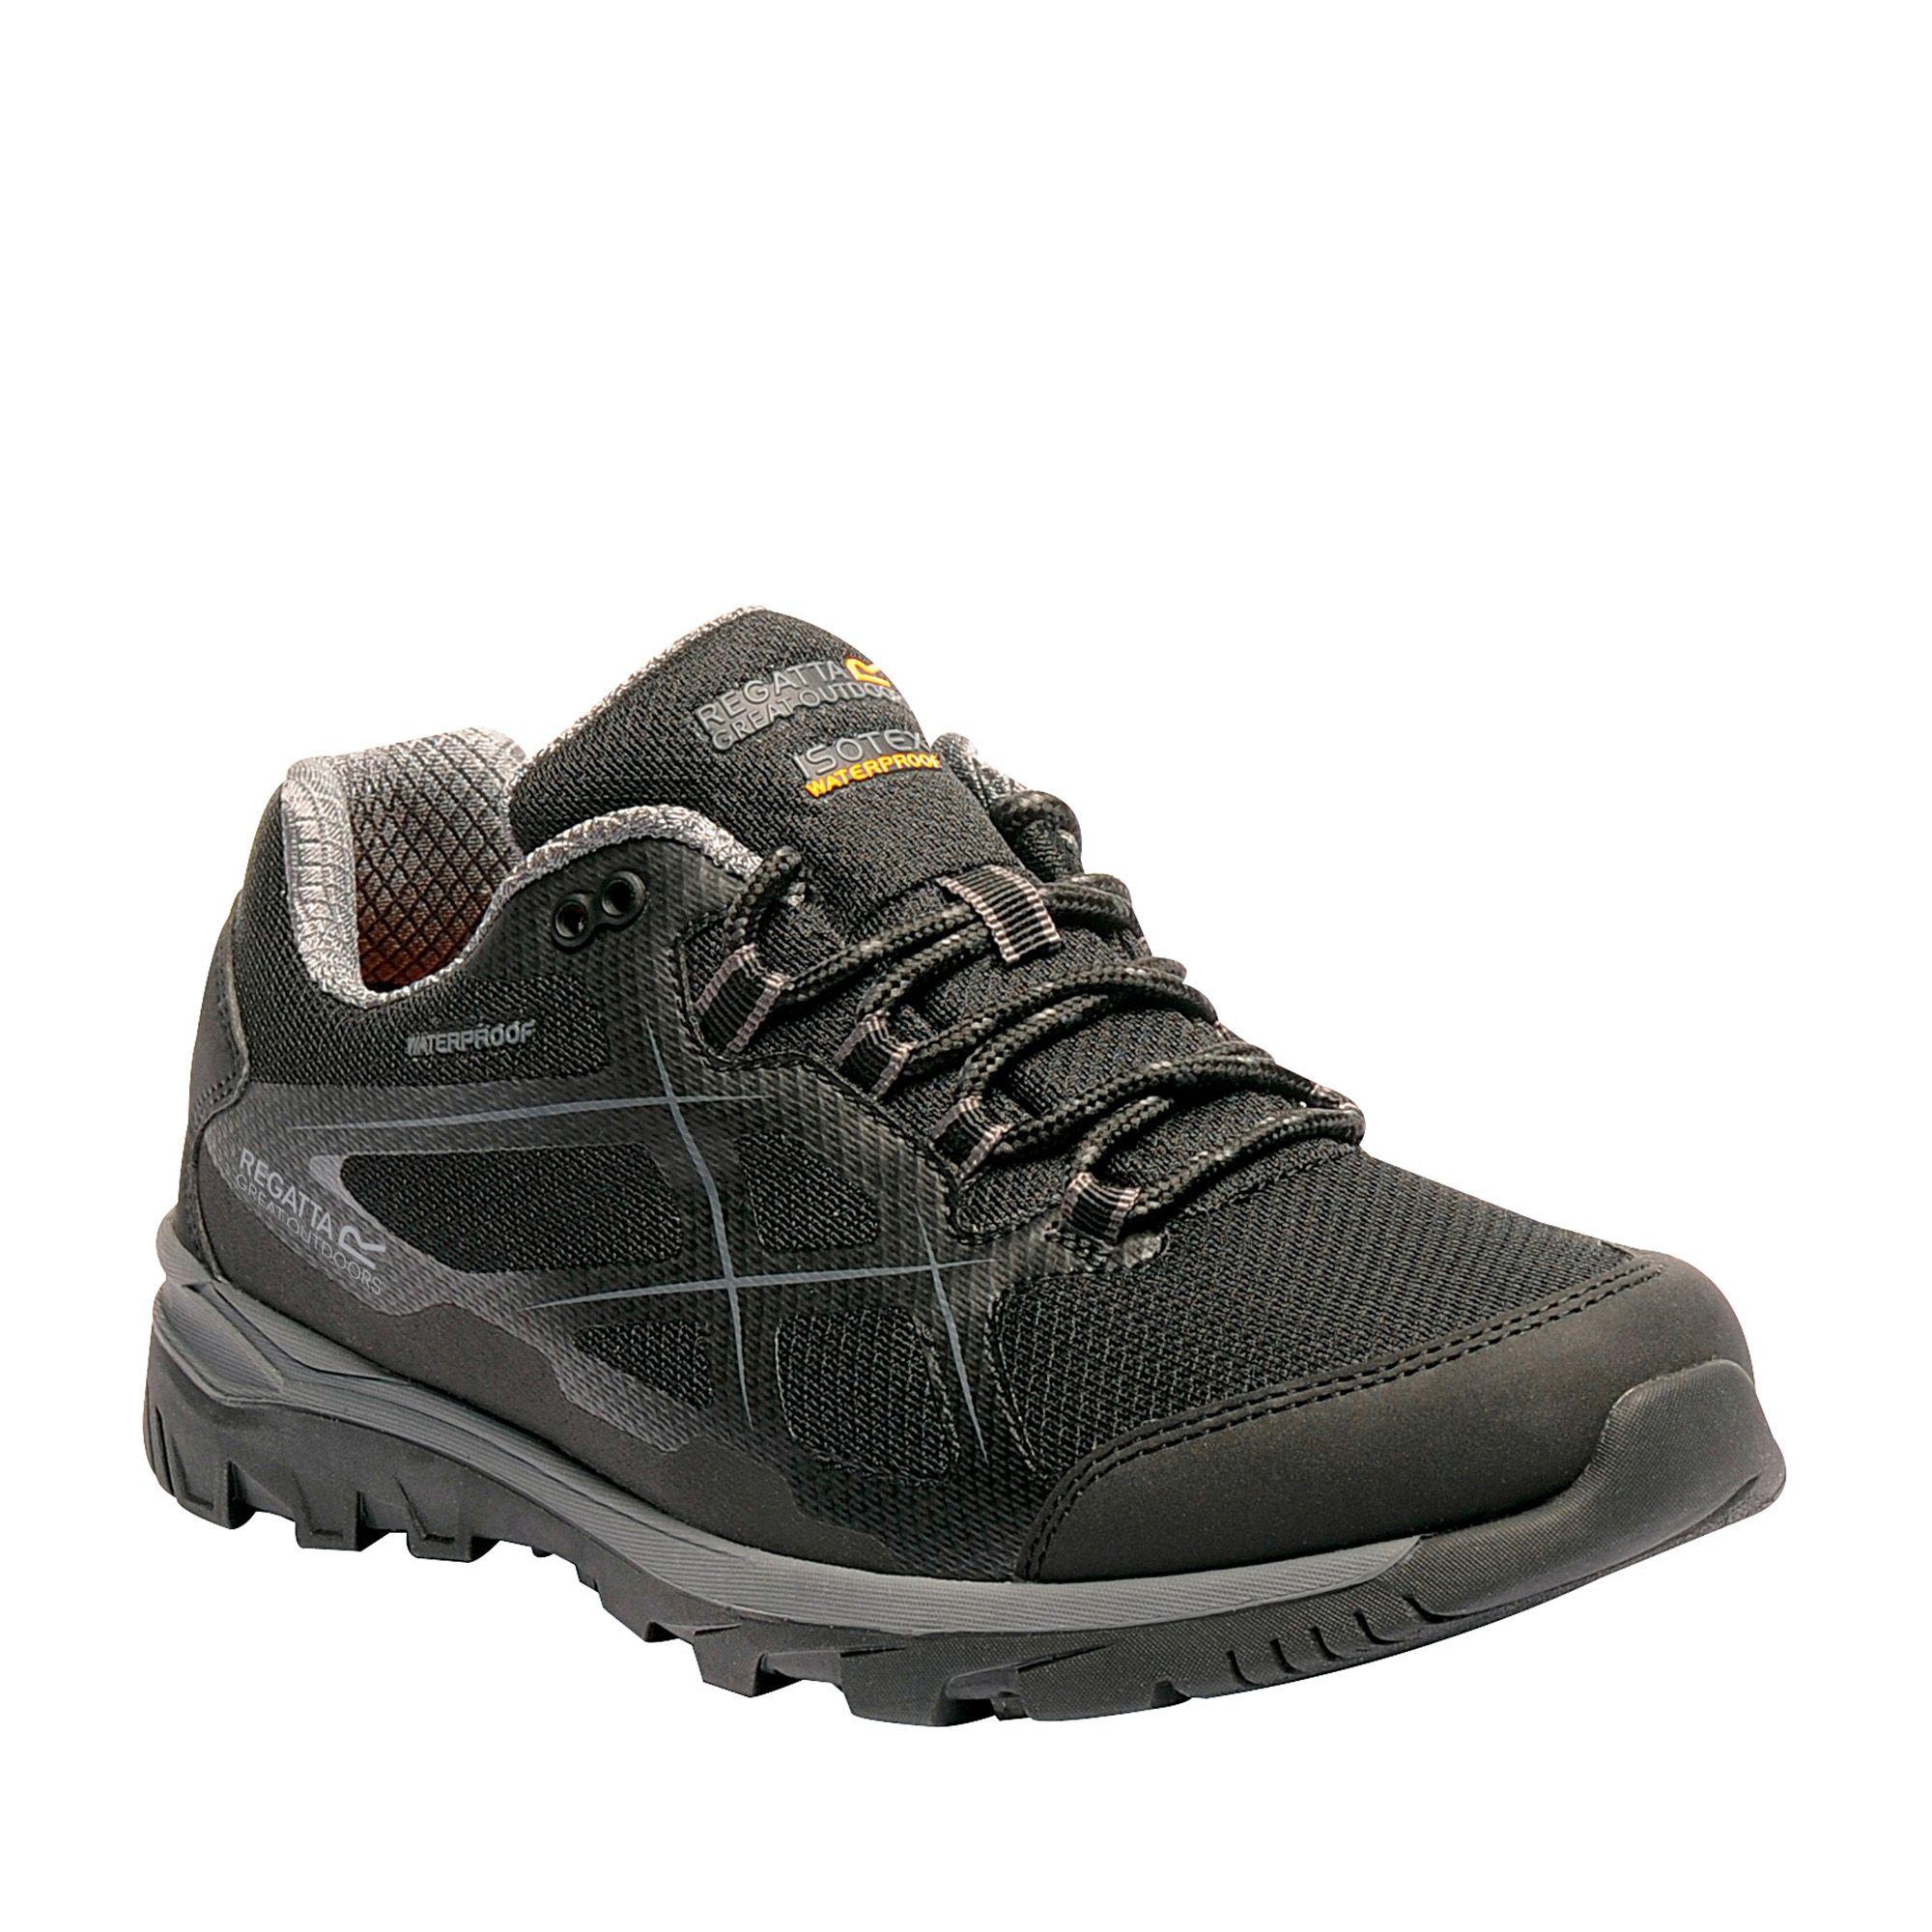 Regatta Rubber Kota Low, Low Rise Hiking Boots in Black/Granite (Black ...